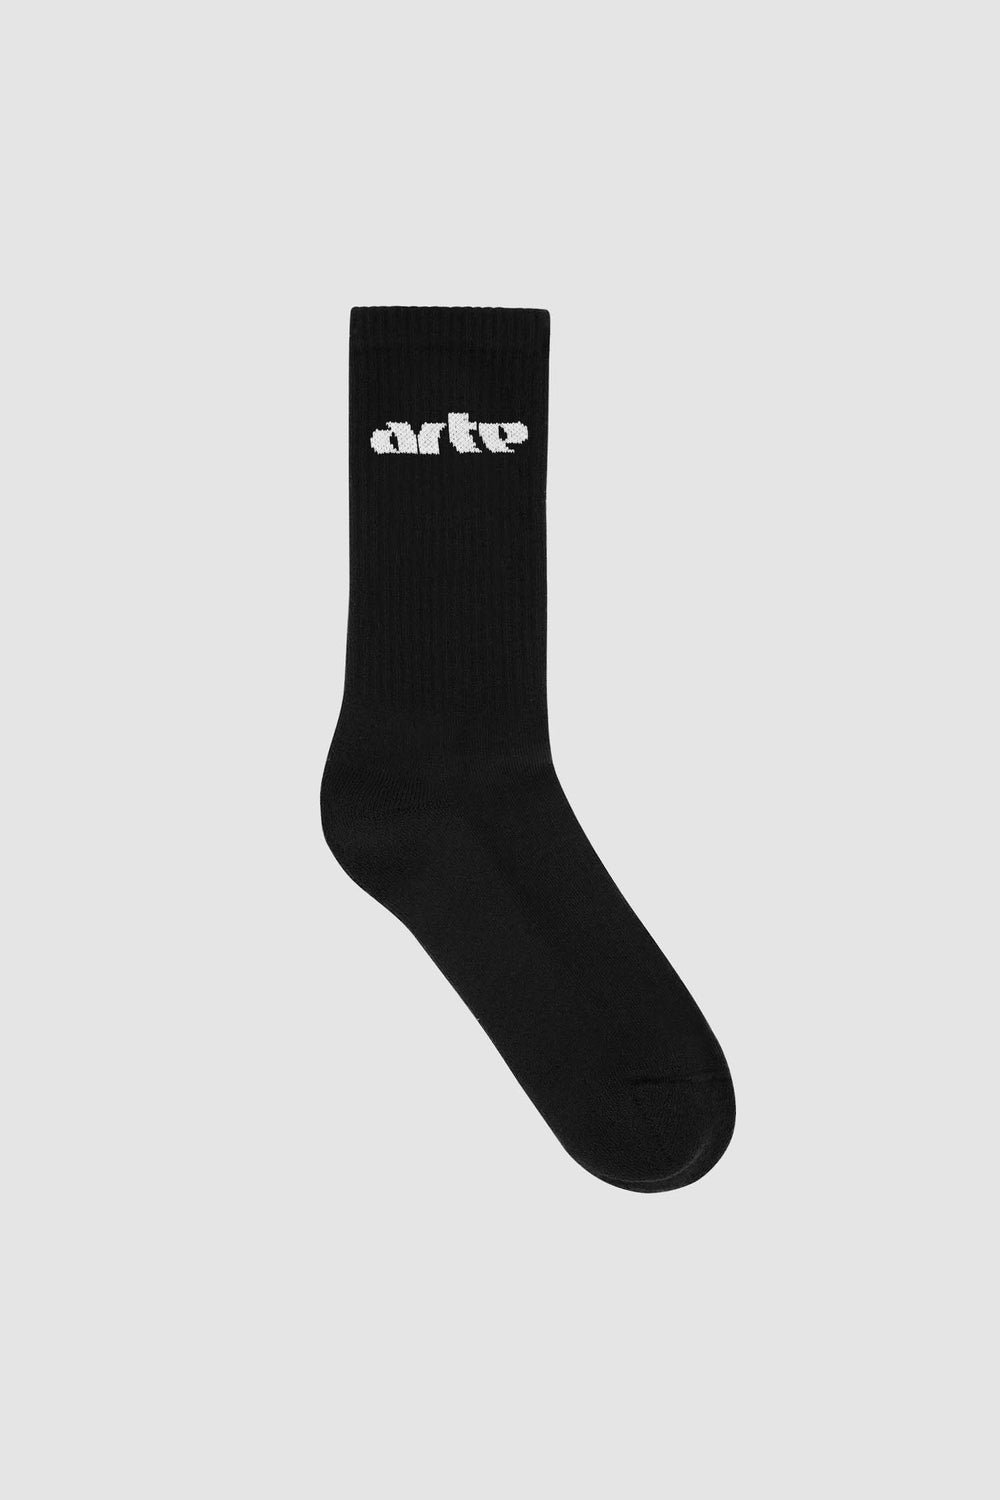 Arte Horizontal Socks - Black